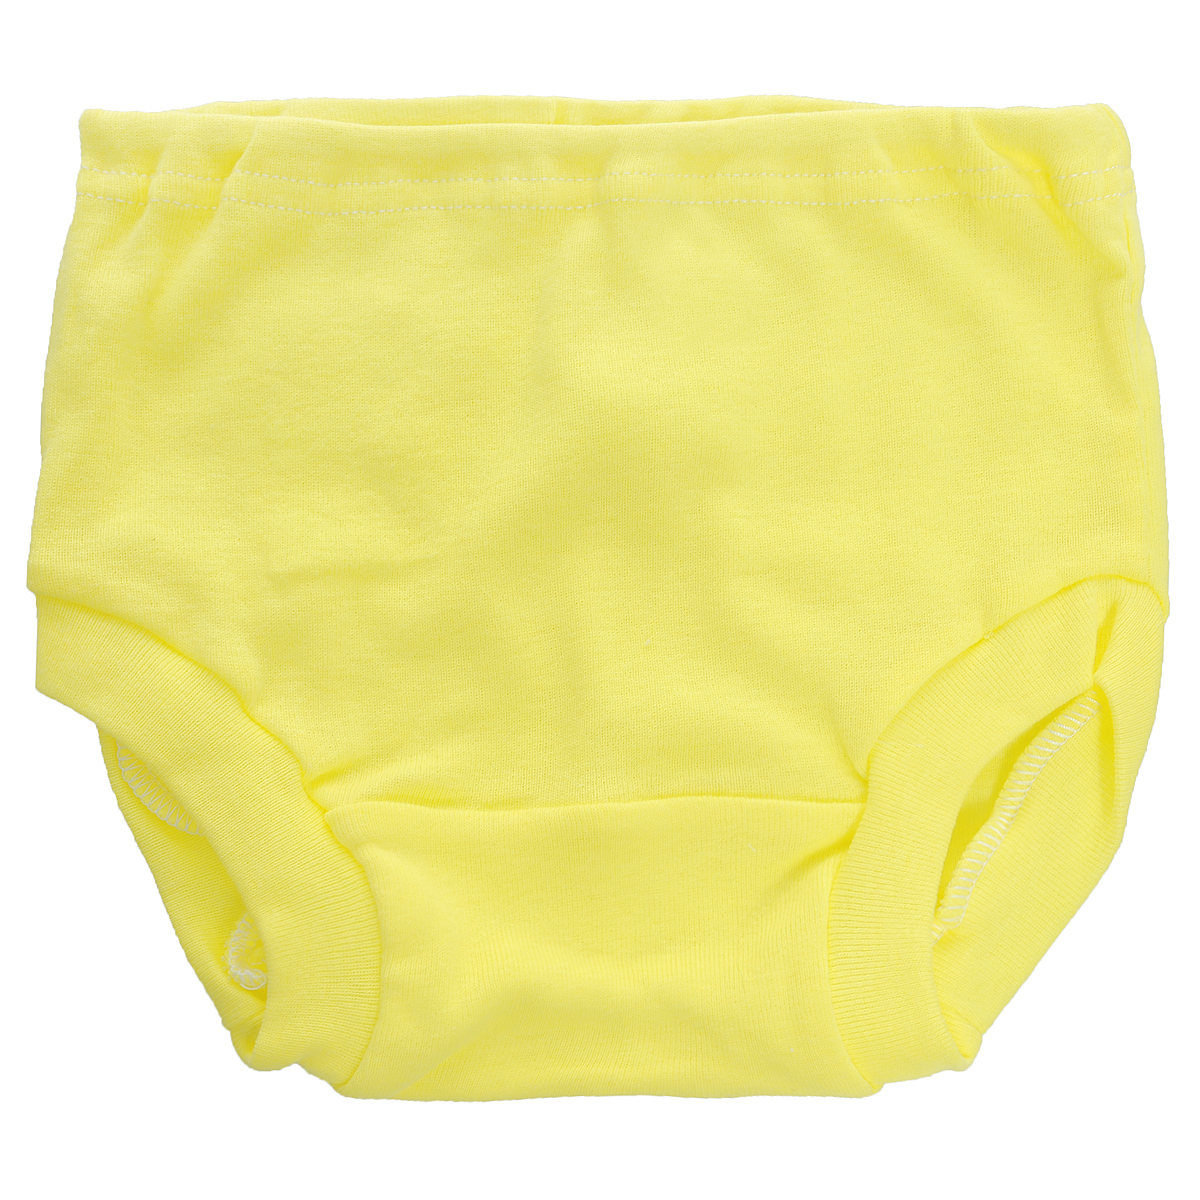 Трусы детские Трон-плюс, цвет: желтый. 8220. Размер 62, 3 месяца